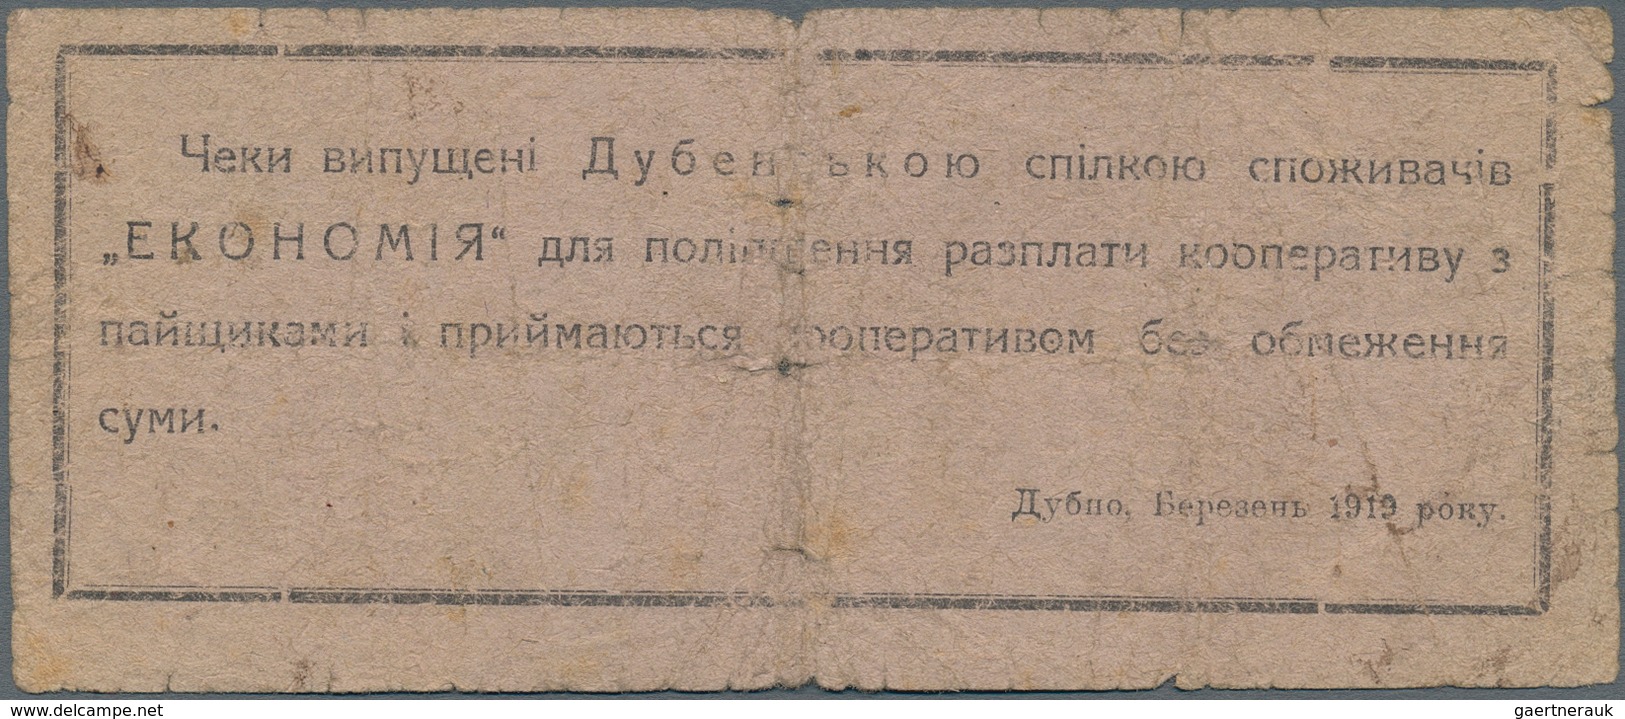 Ukraina / Ukraine: Check Of 3 Karbovantsiv 1919, P.NL (R 14237), Almost Well Worn With Tiny Holes At - Ukraine